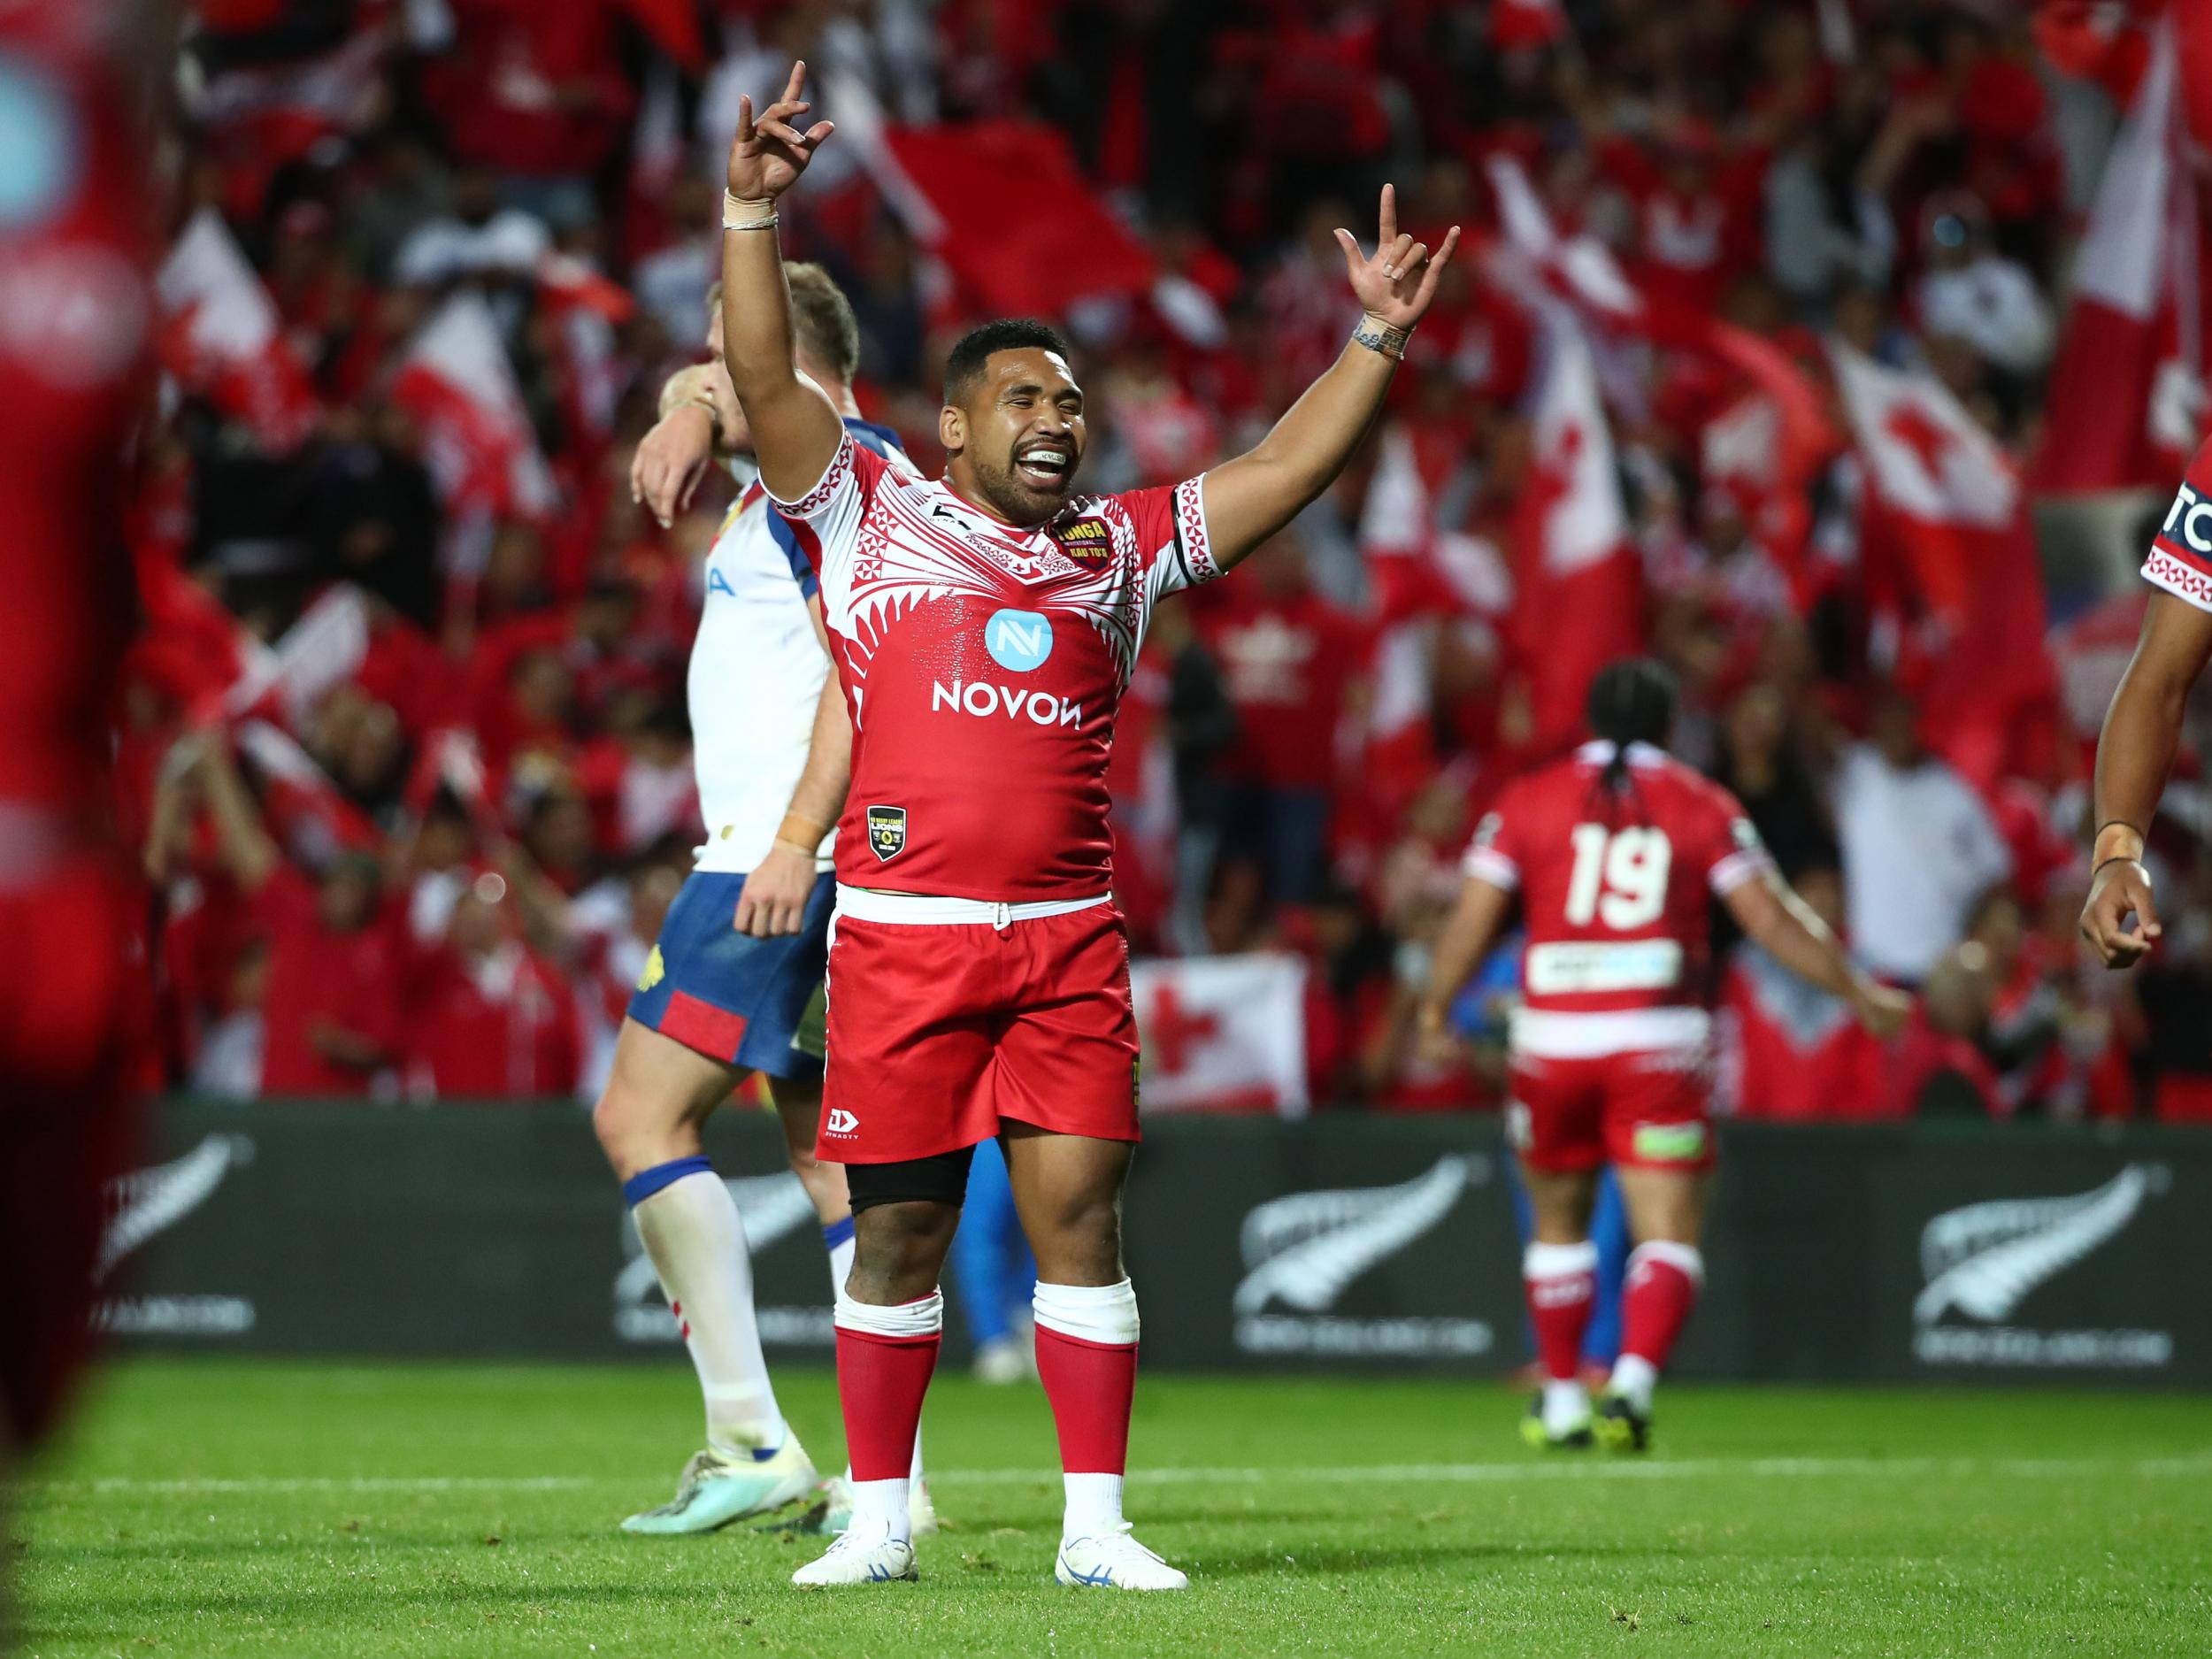 Siliva Havili of Tonga celebrates his side's victory over Great Britain